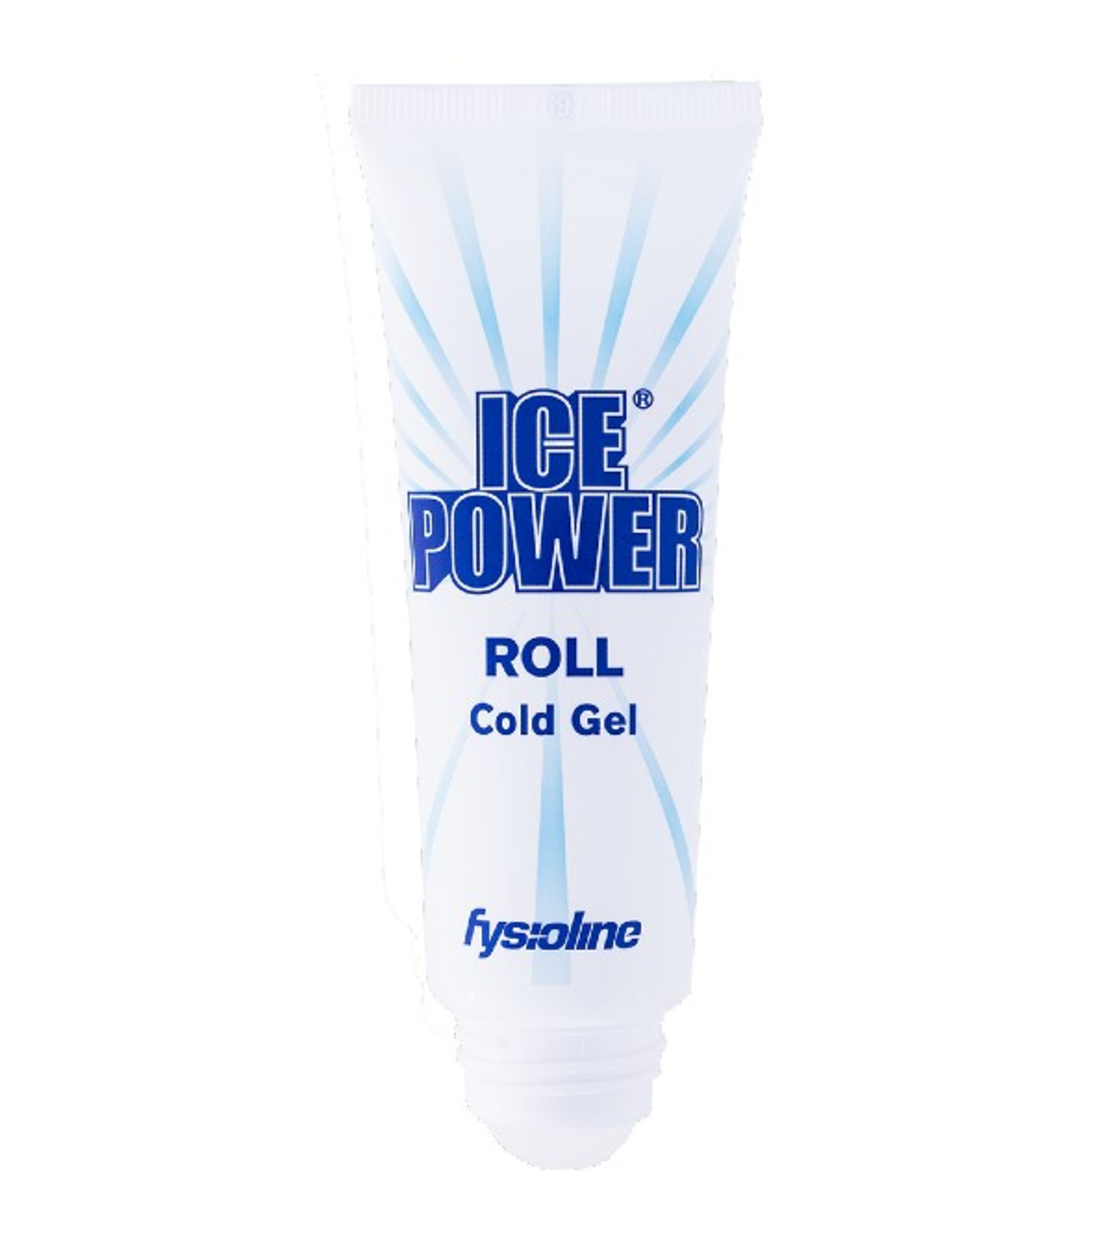 ICE POWER ROLL